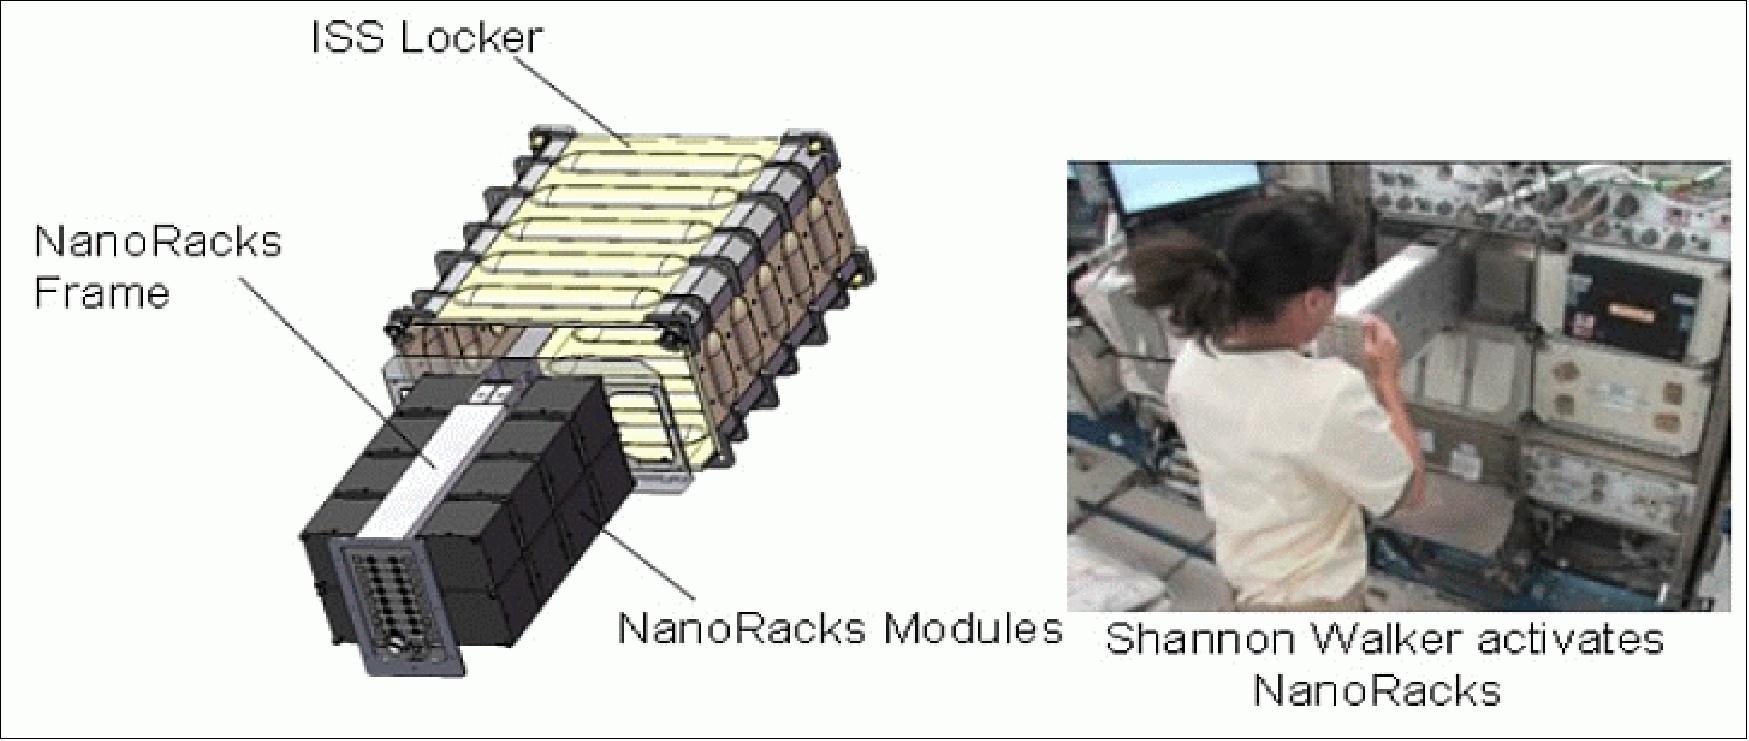 Figure 40: NanoRacks Frame and Shannon Walker activating NanoRacks Frame 1(image credit: NanoRacks)